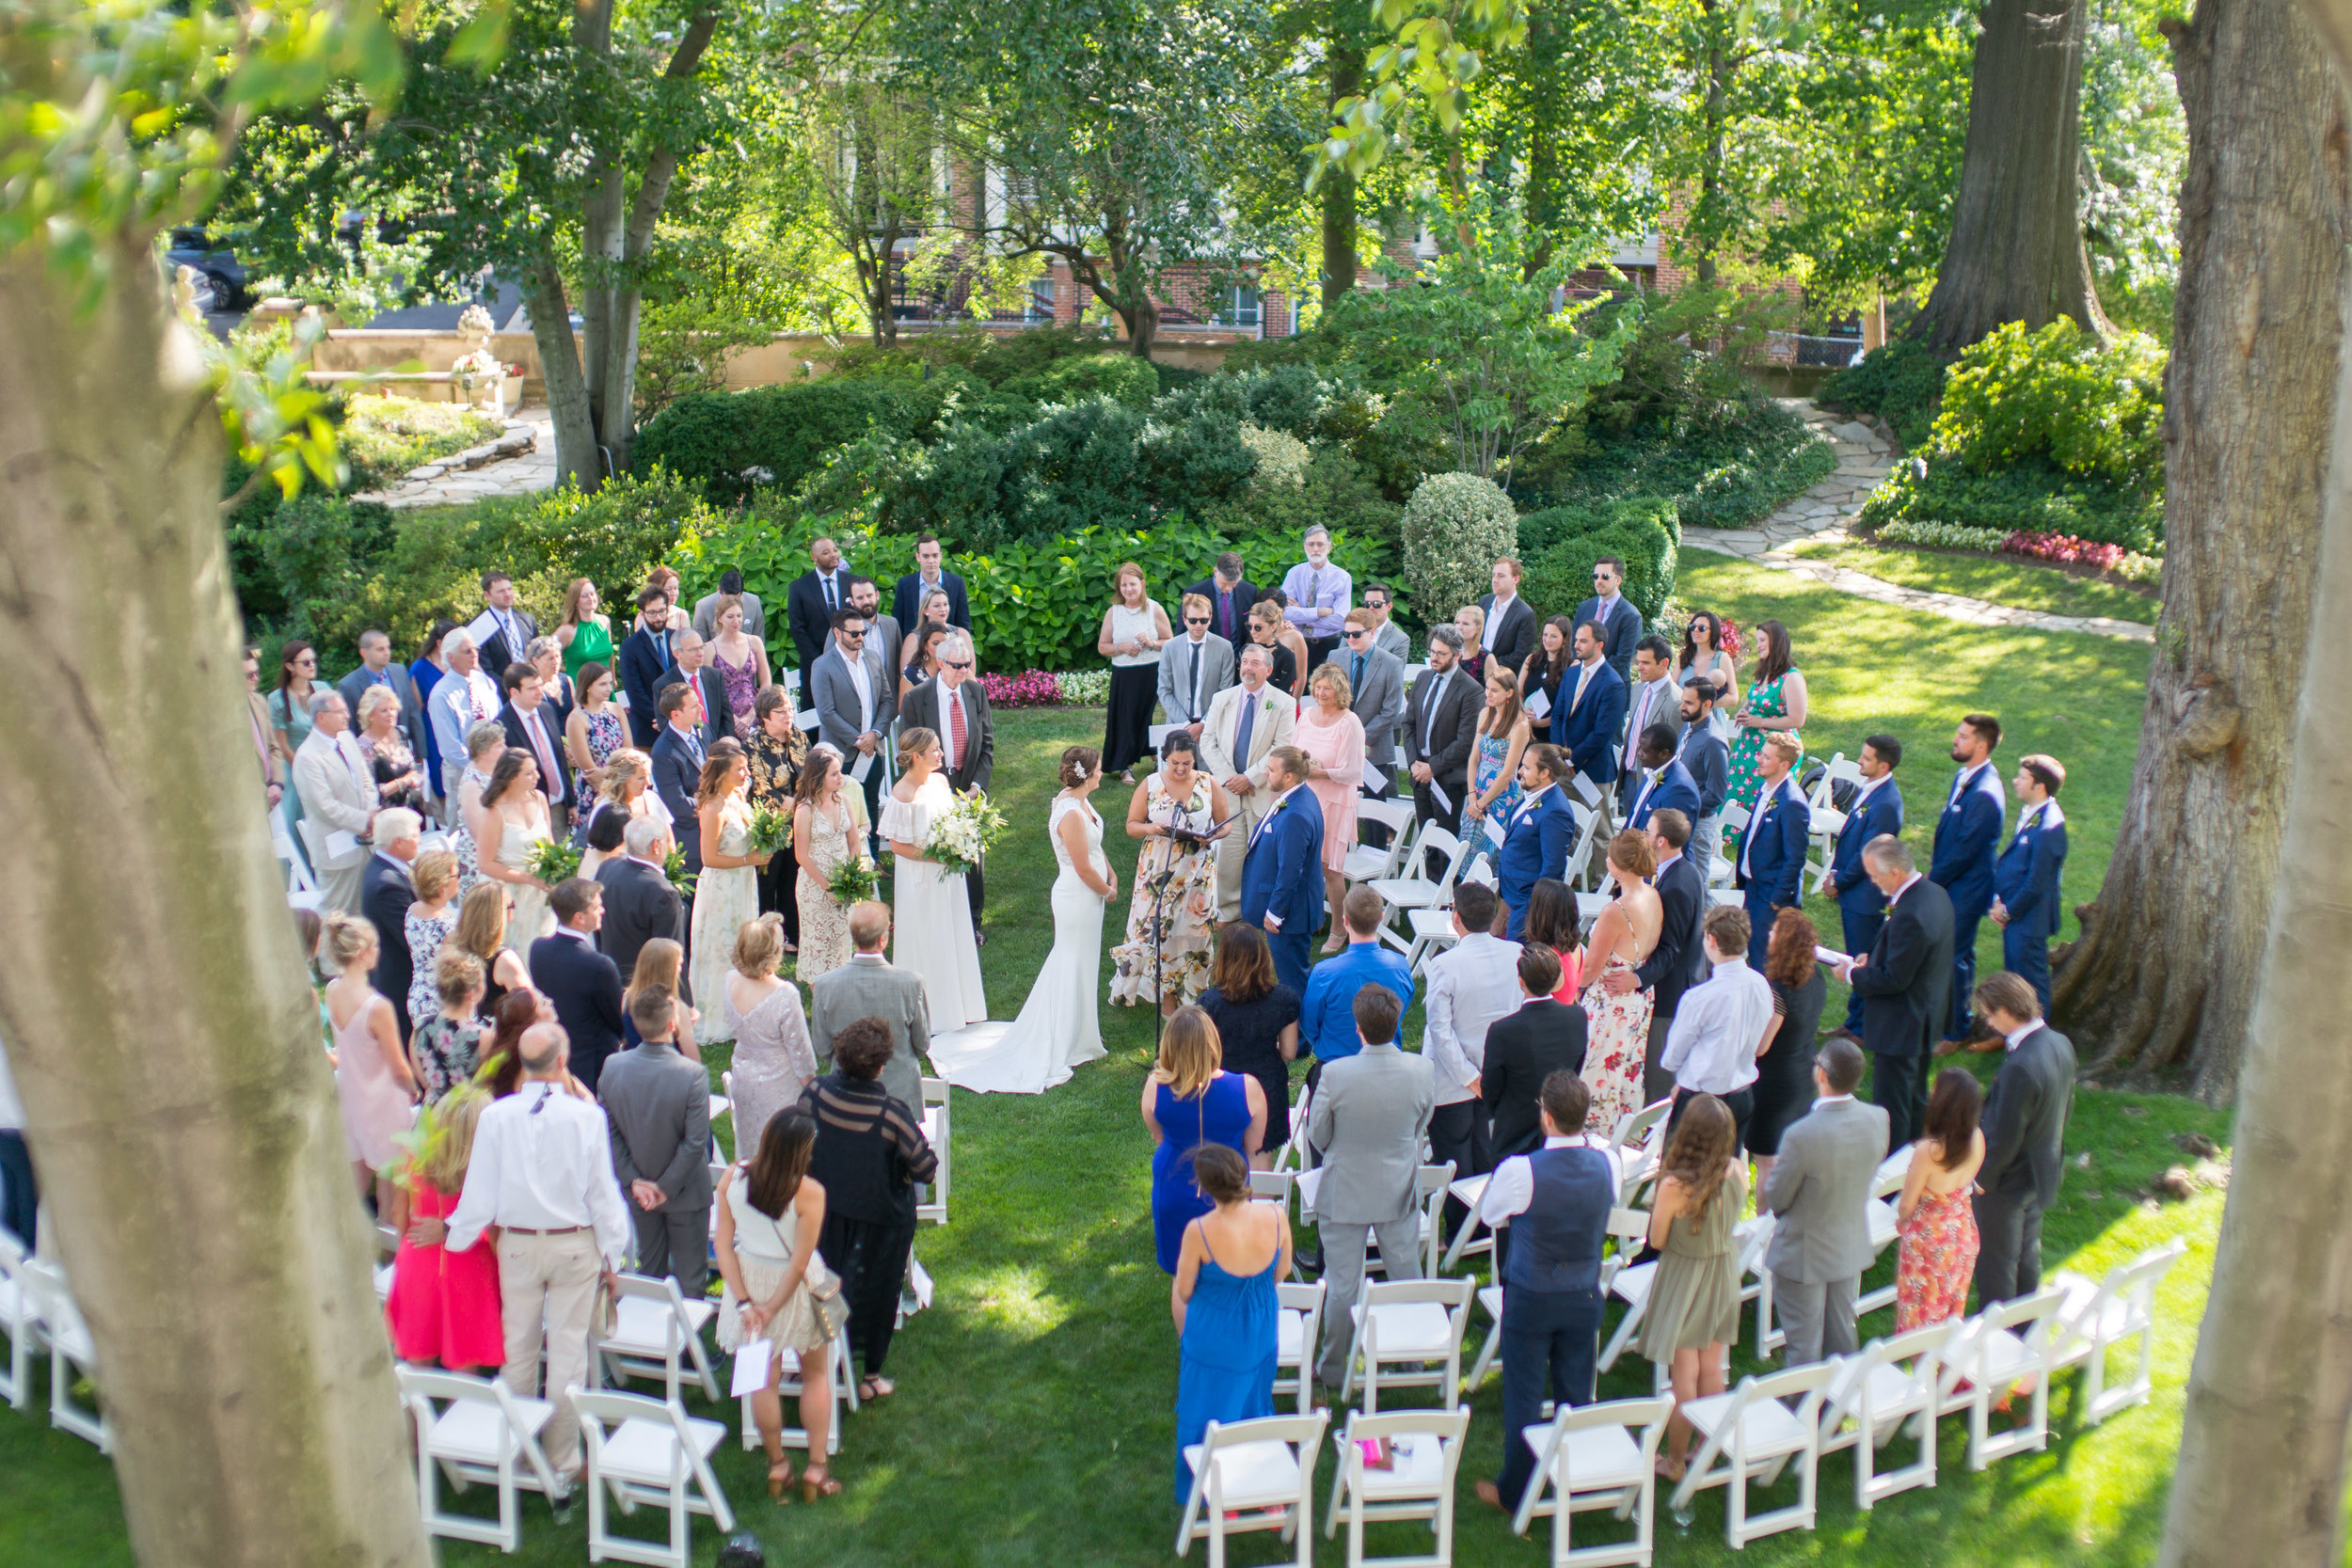 Meridian House outdoor ceremony photos summer wedding by Jessica nazarova